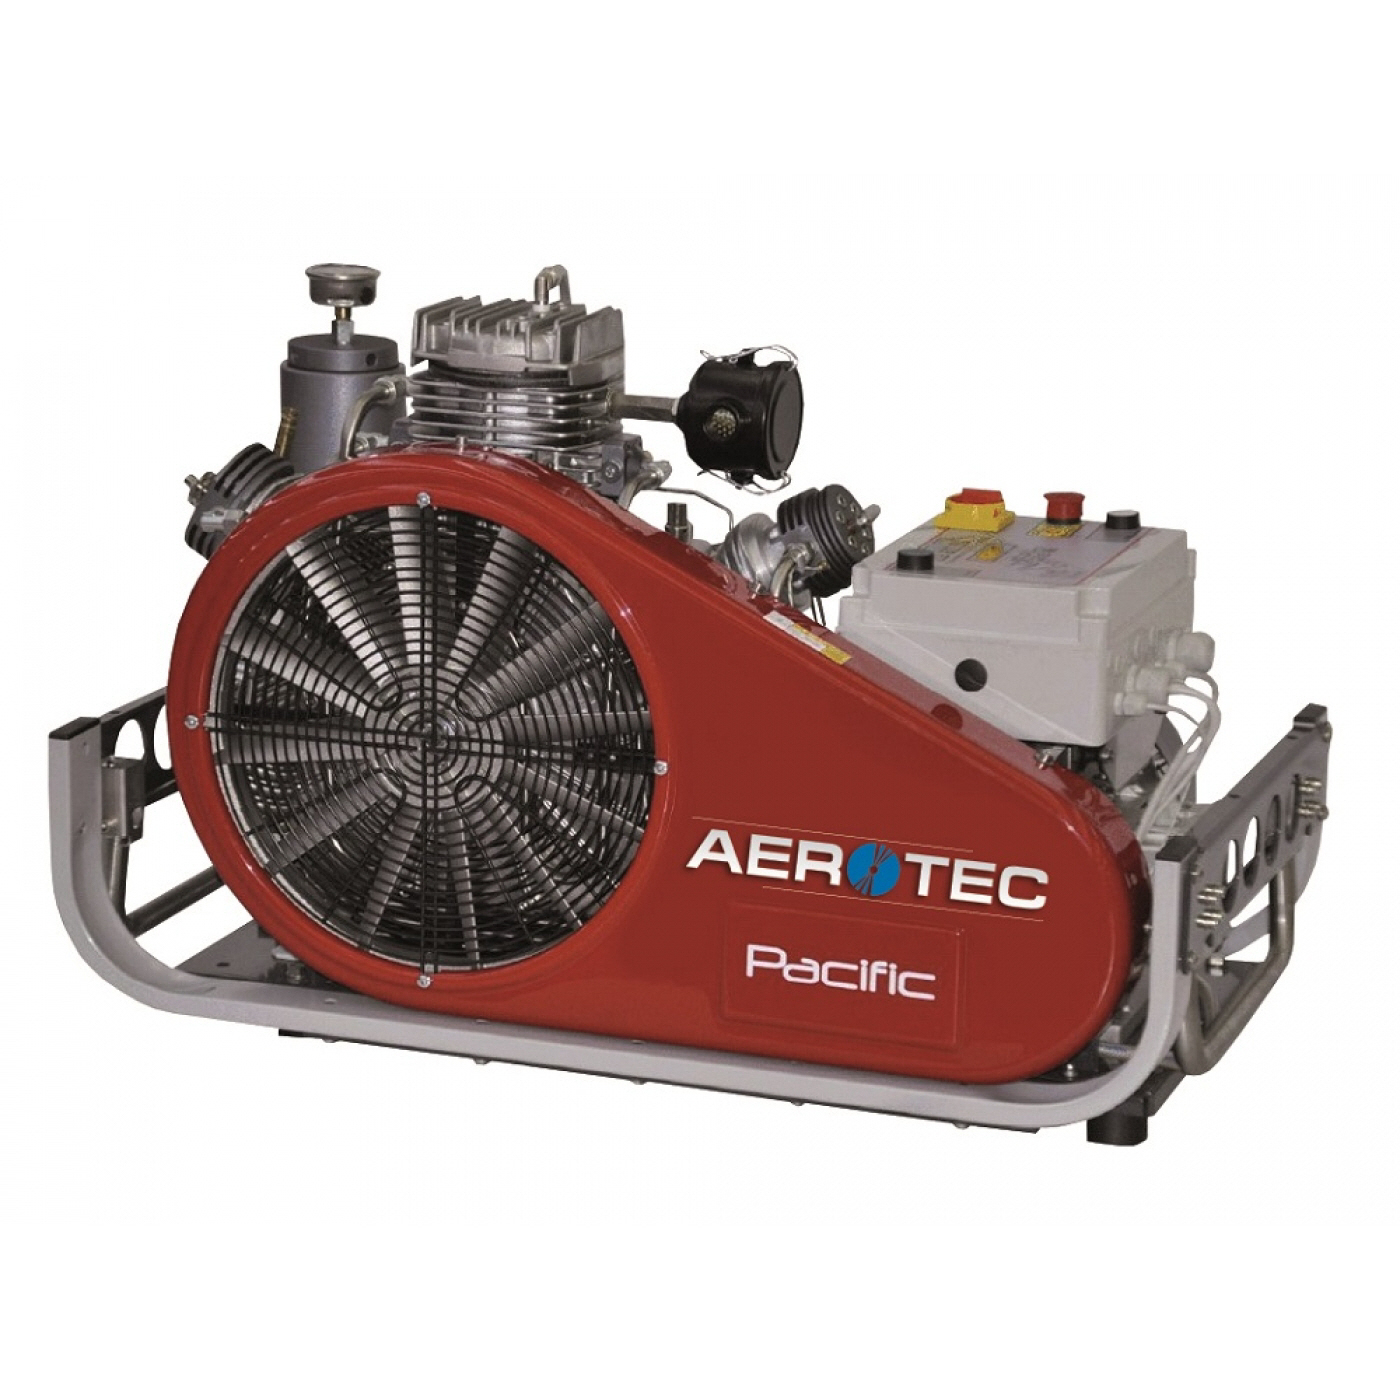 AEROTEC Kolbenkompressor PACIFIC E 30 - 330 bar Tauchkompressoren